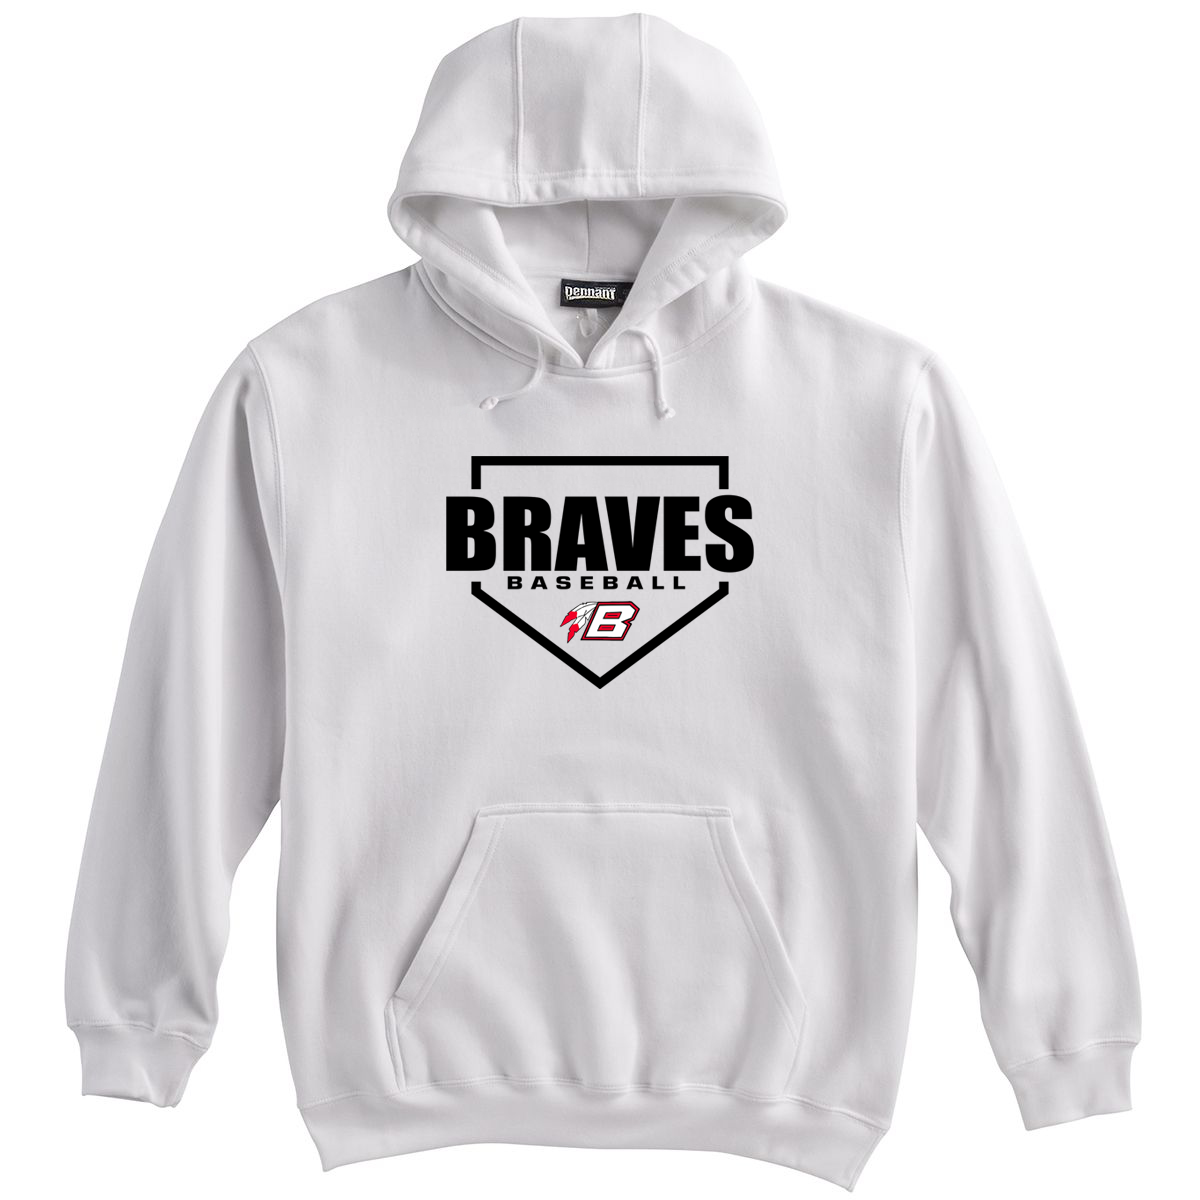 Braves Youth Baseball Sweatshirt